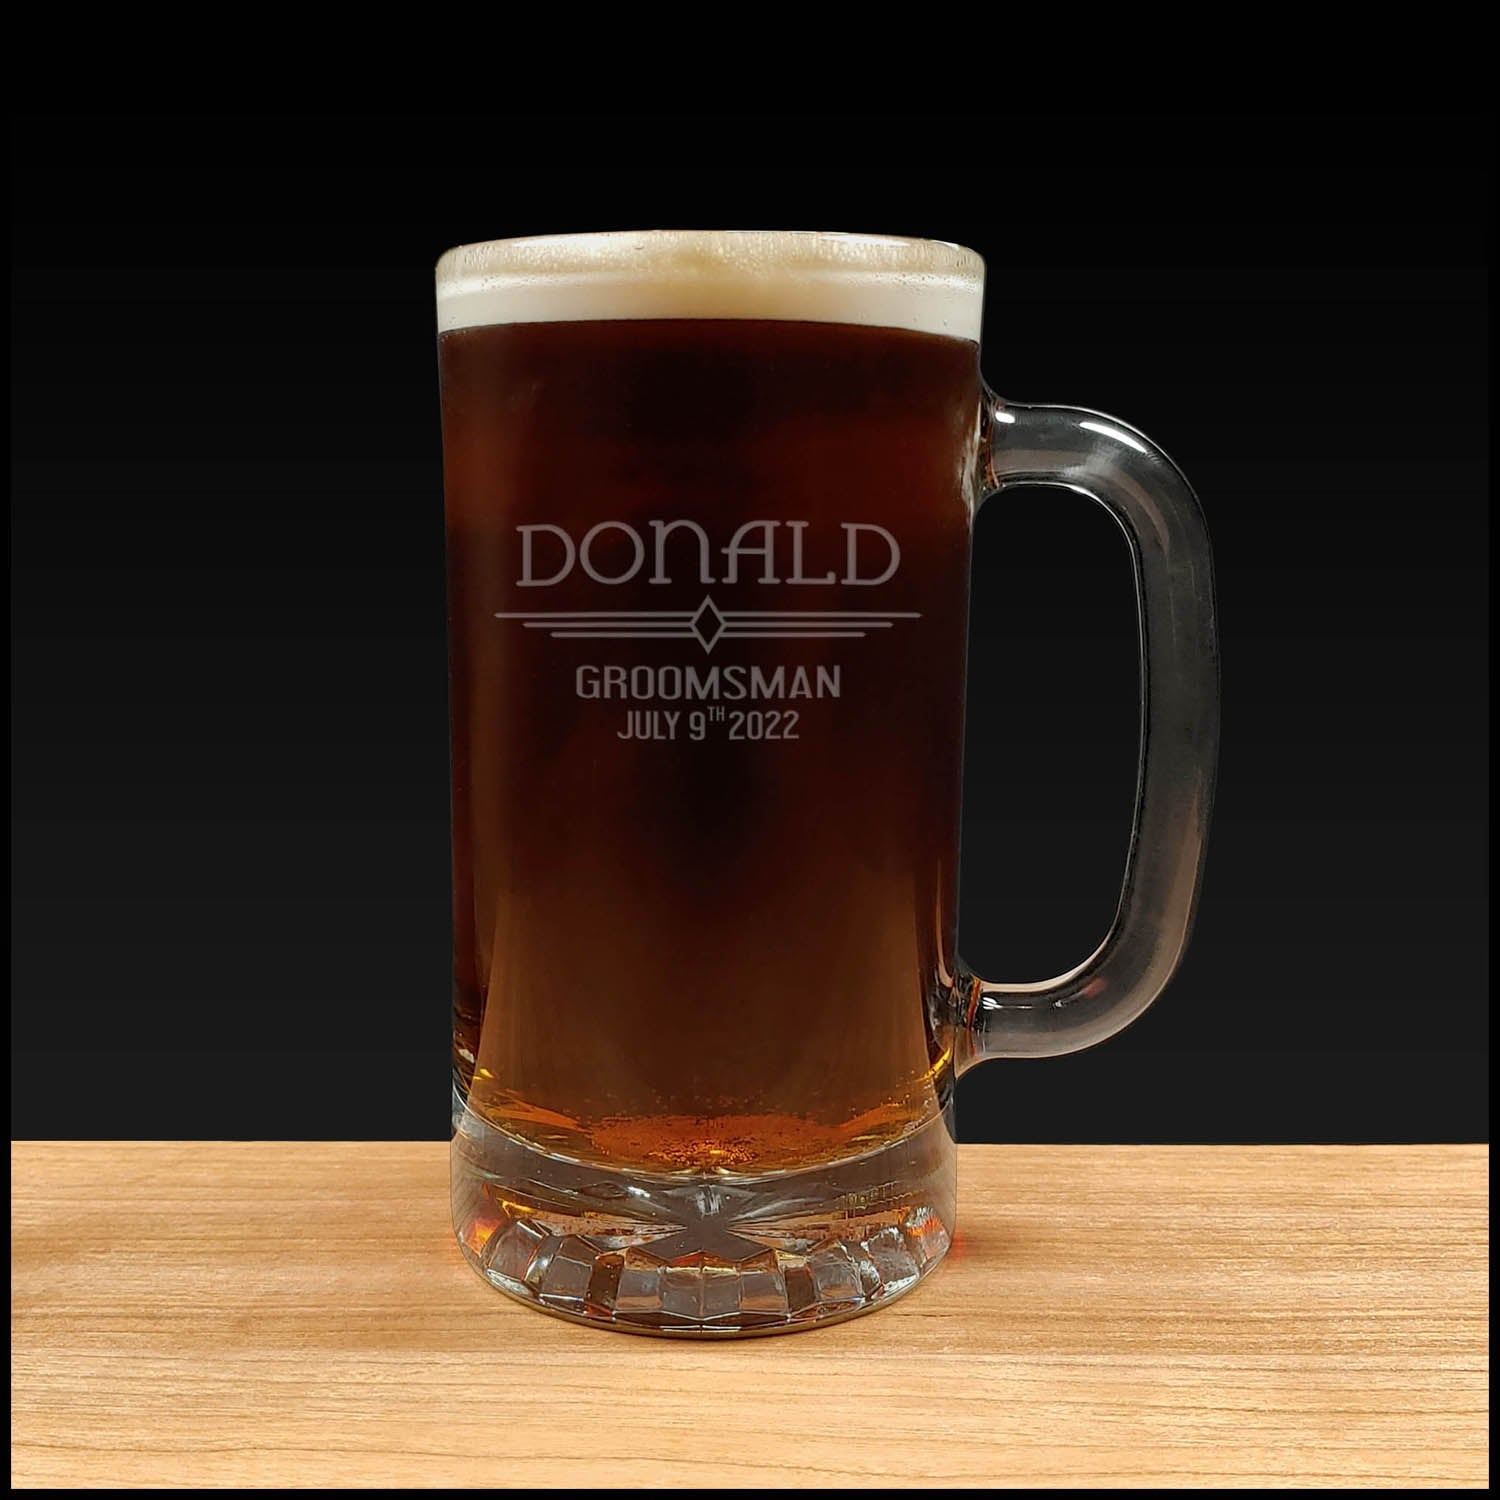 Classic Groomsman Beer Mug design - Dark Beer - Copyright Hues in Glass